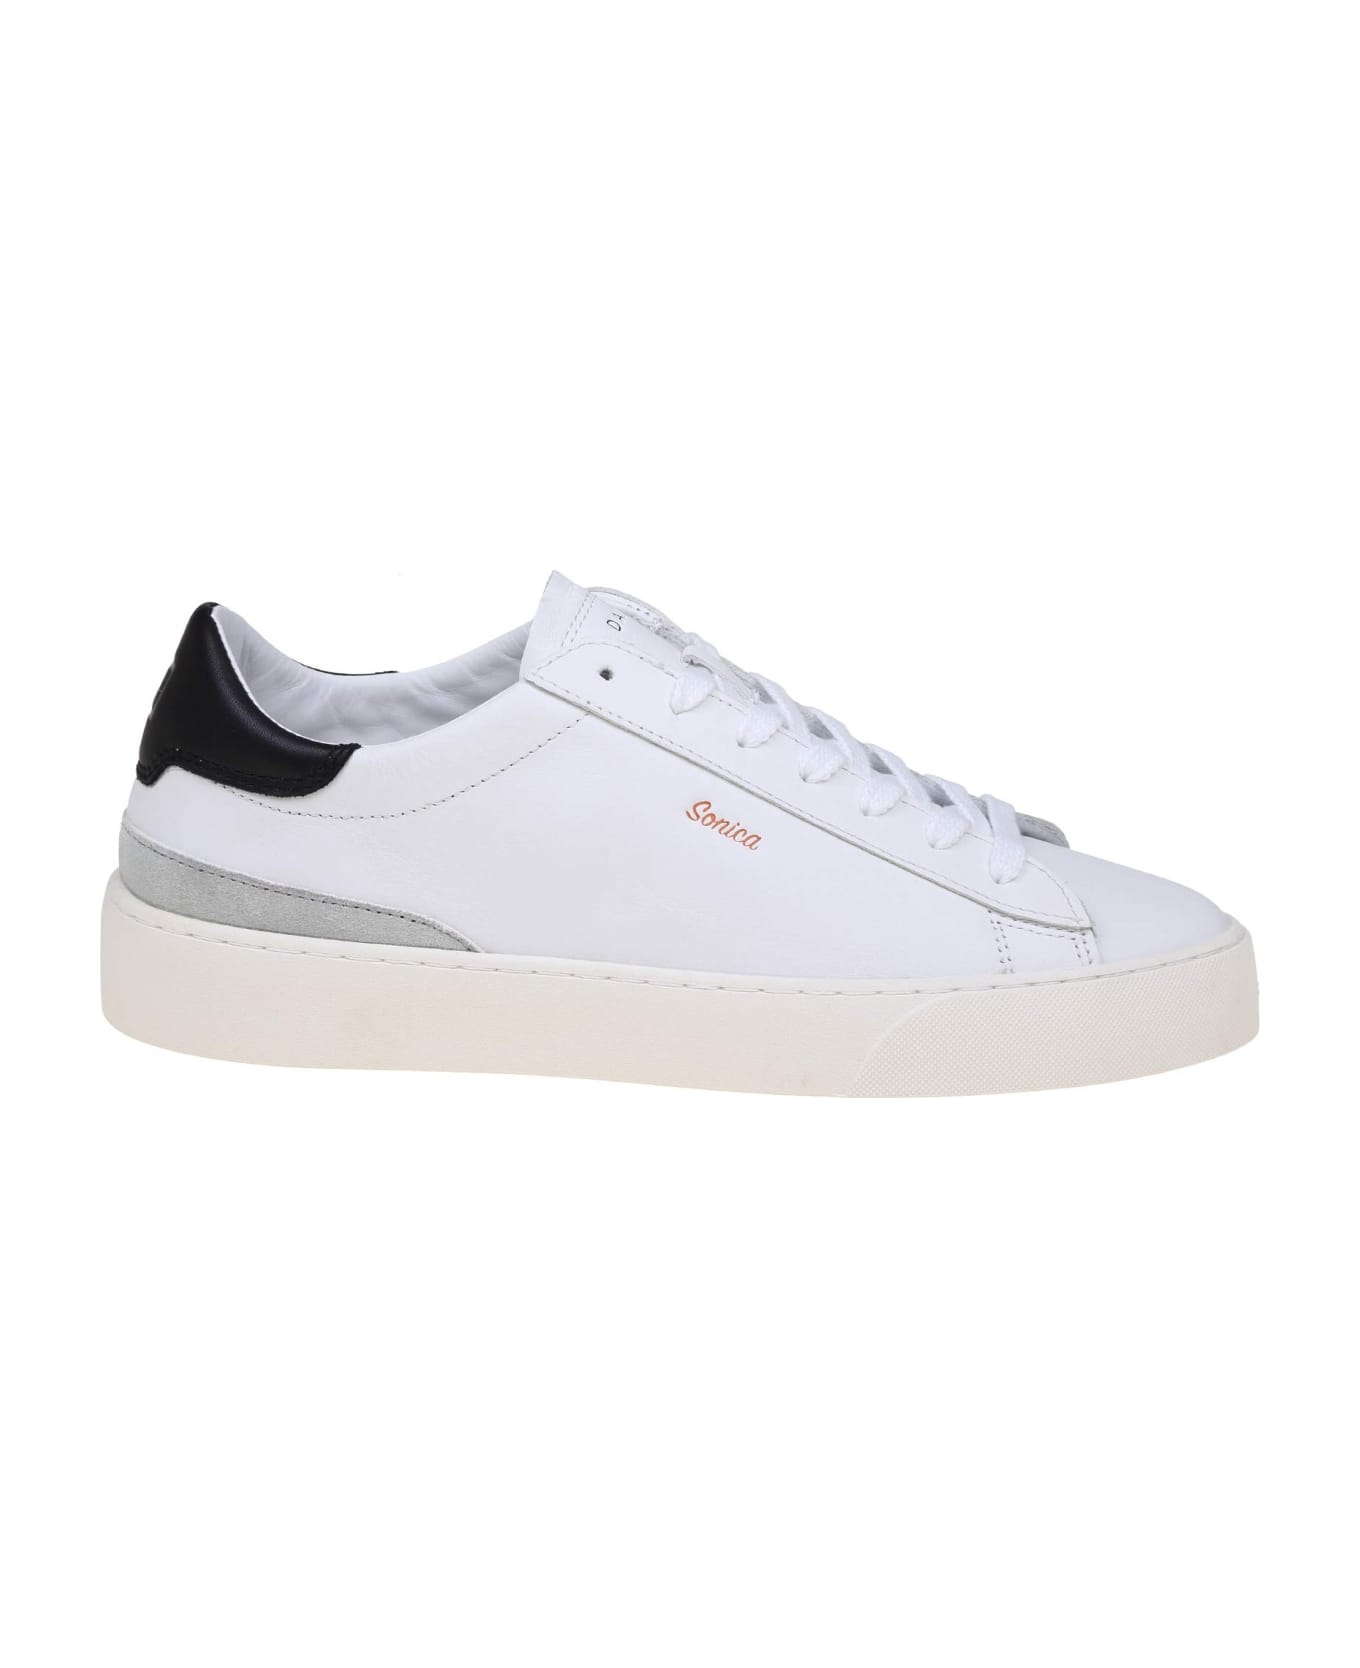 D.A.T.E. Sonica Sneakers In White/black Leather - White/Black